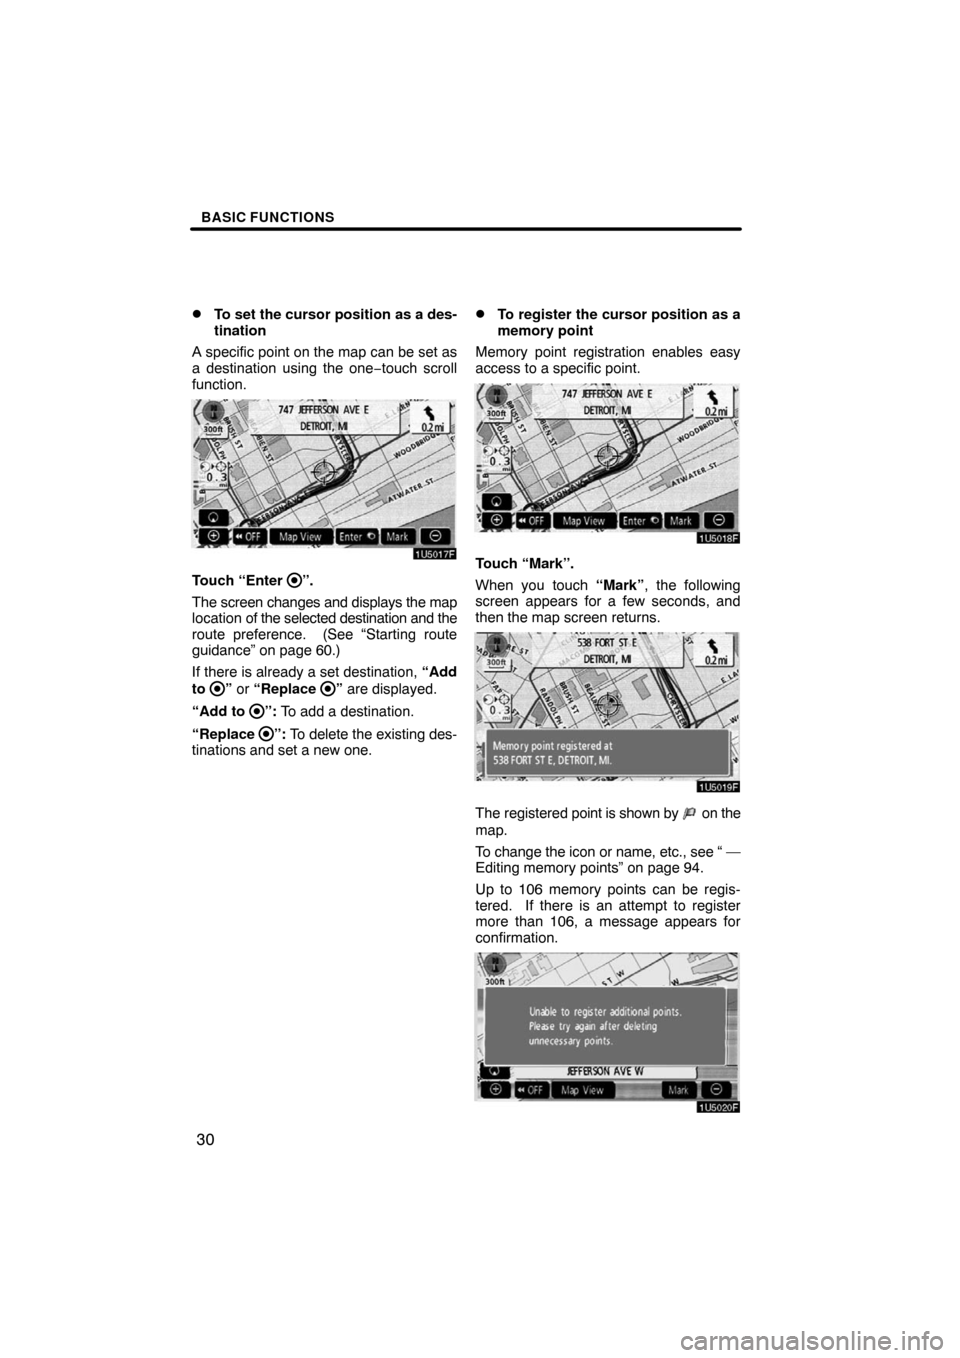 TOYOTA HIGHLANDER 2008 XU40 / 2.G Navigation Manual BASIC FUNCTIONS
30 
To set the cursor position as a des-
tination
A specific point on the map can be set as
a destination using the one−touch scroll
function.
Touch “Enter ”.
The screen changes